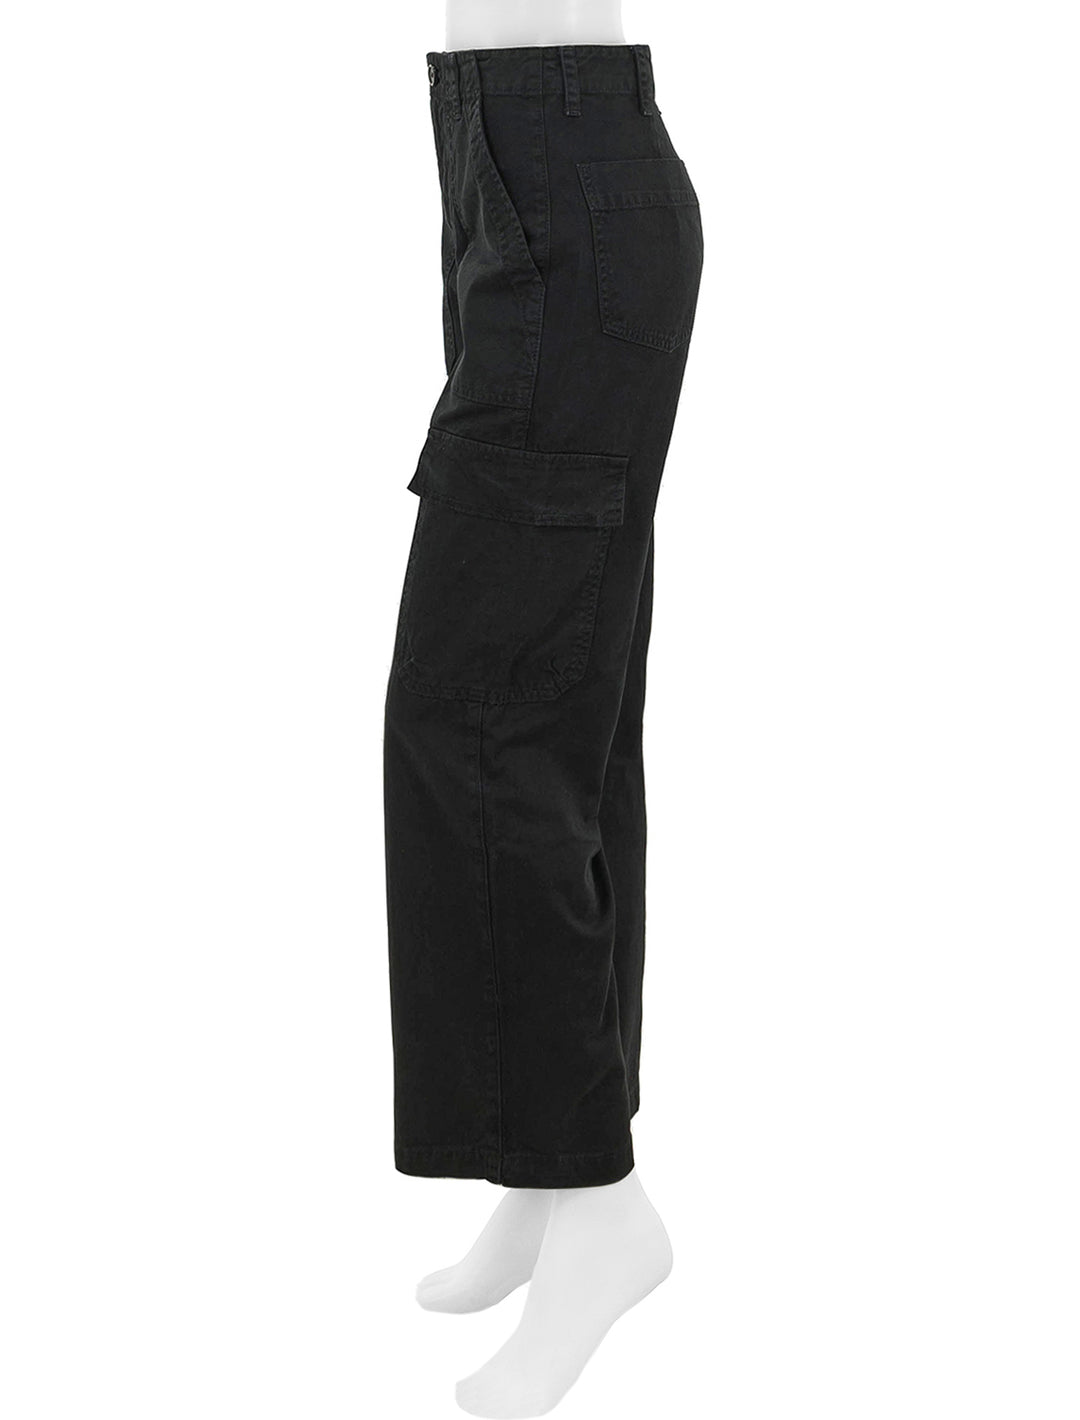 Side view of Velvet's makayla cargo pant in vintage black.